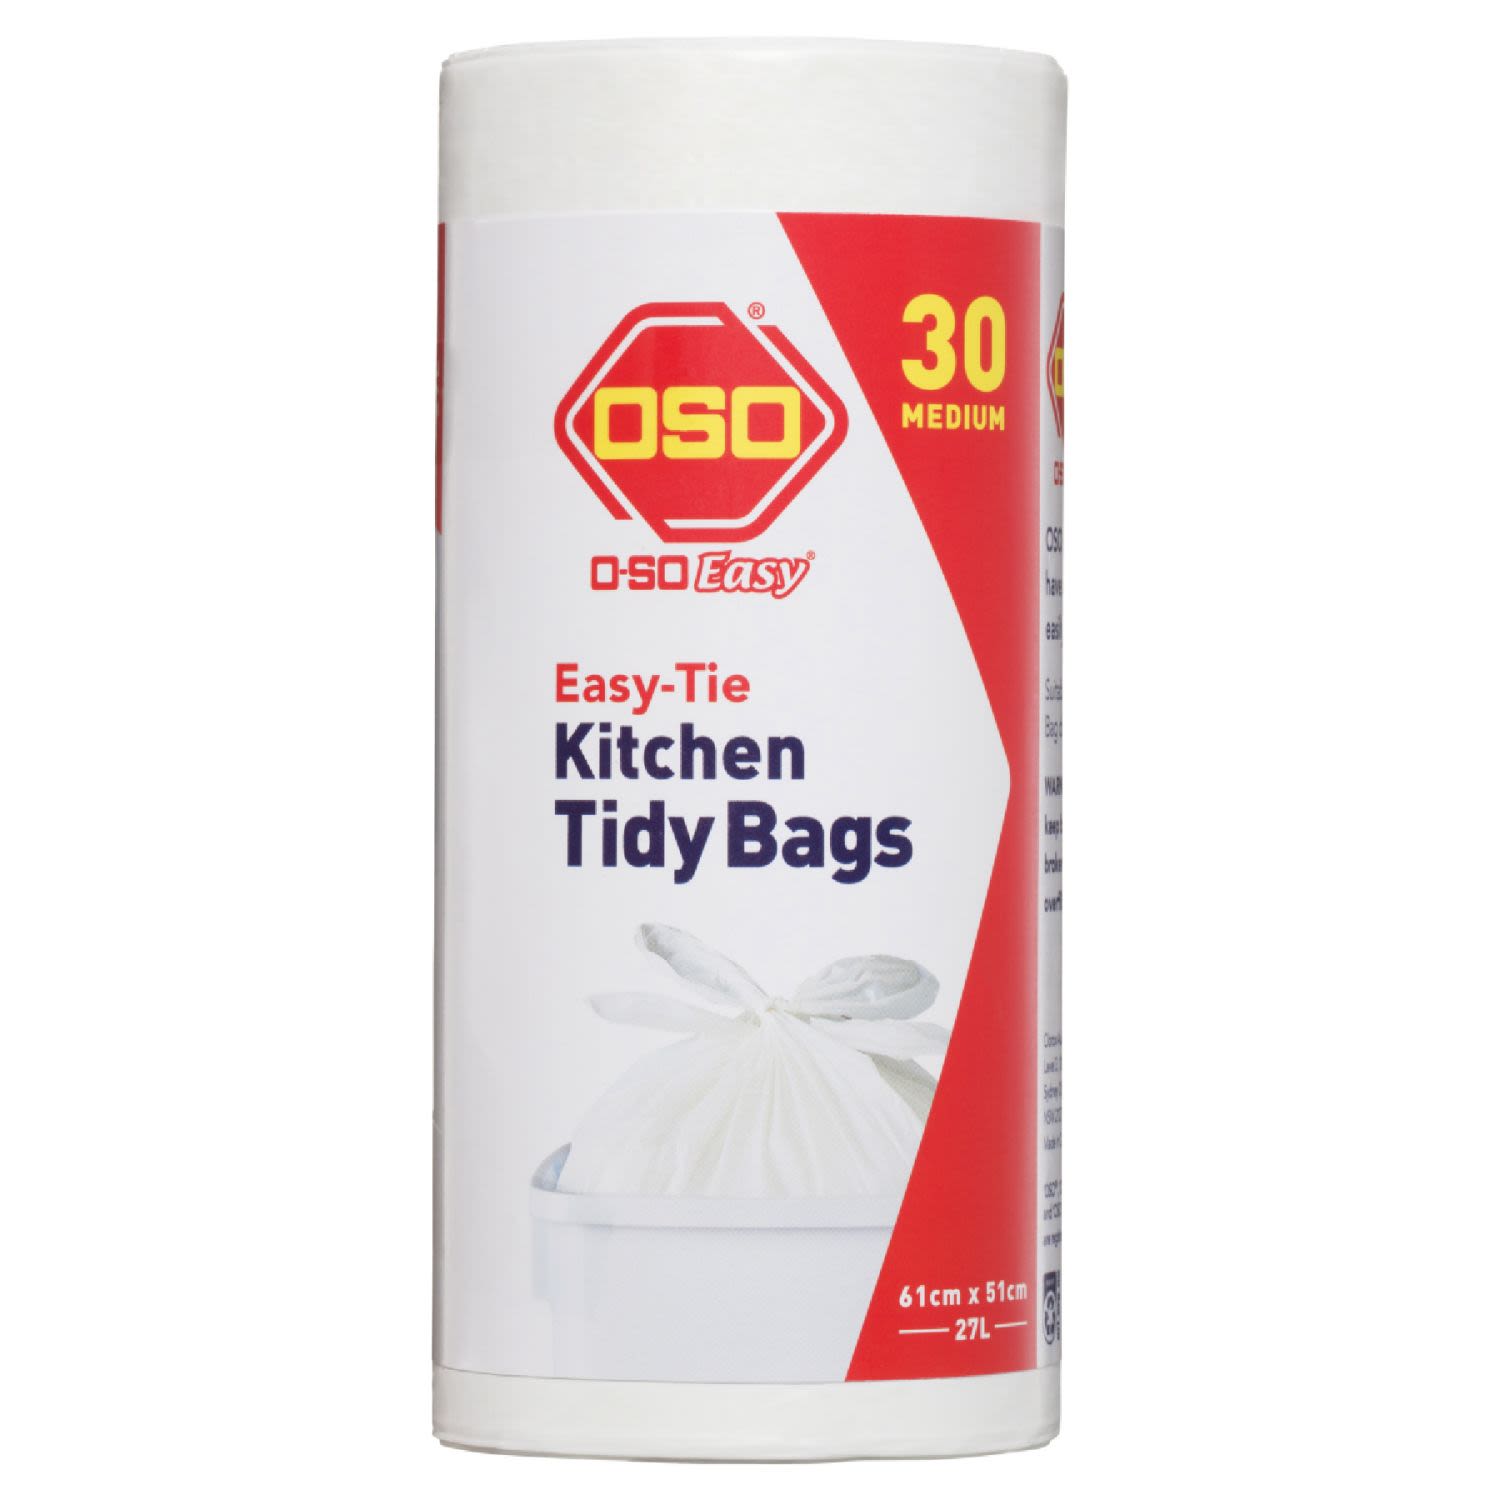 Oso Easy-Tie Kitchen Tidy Bags Medium, 30 Each